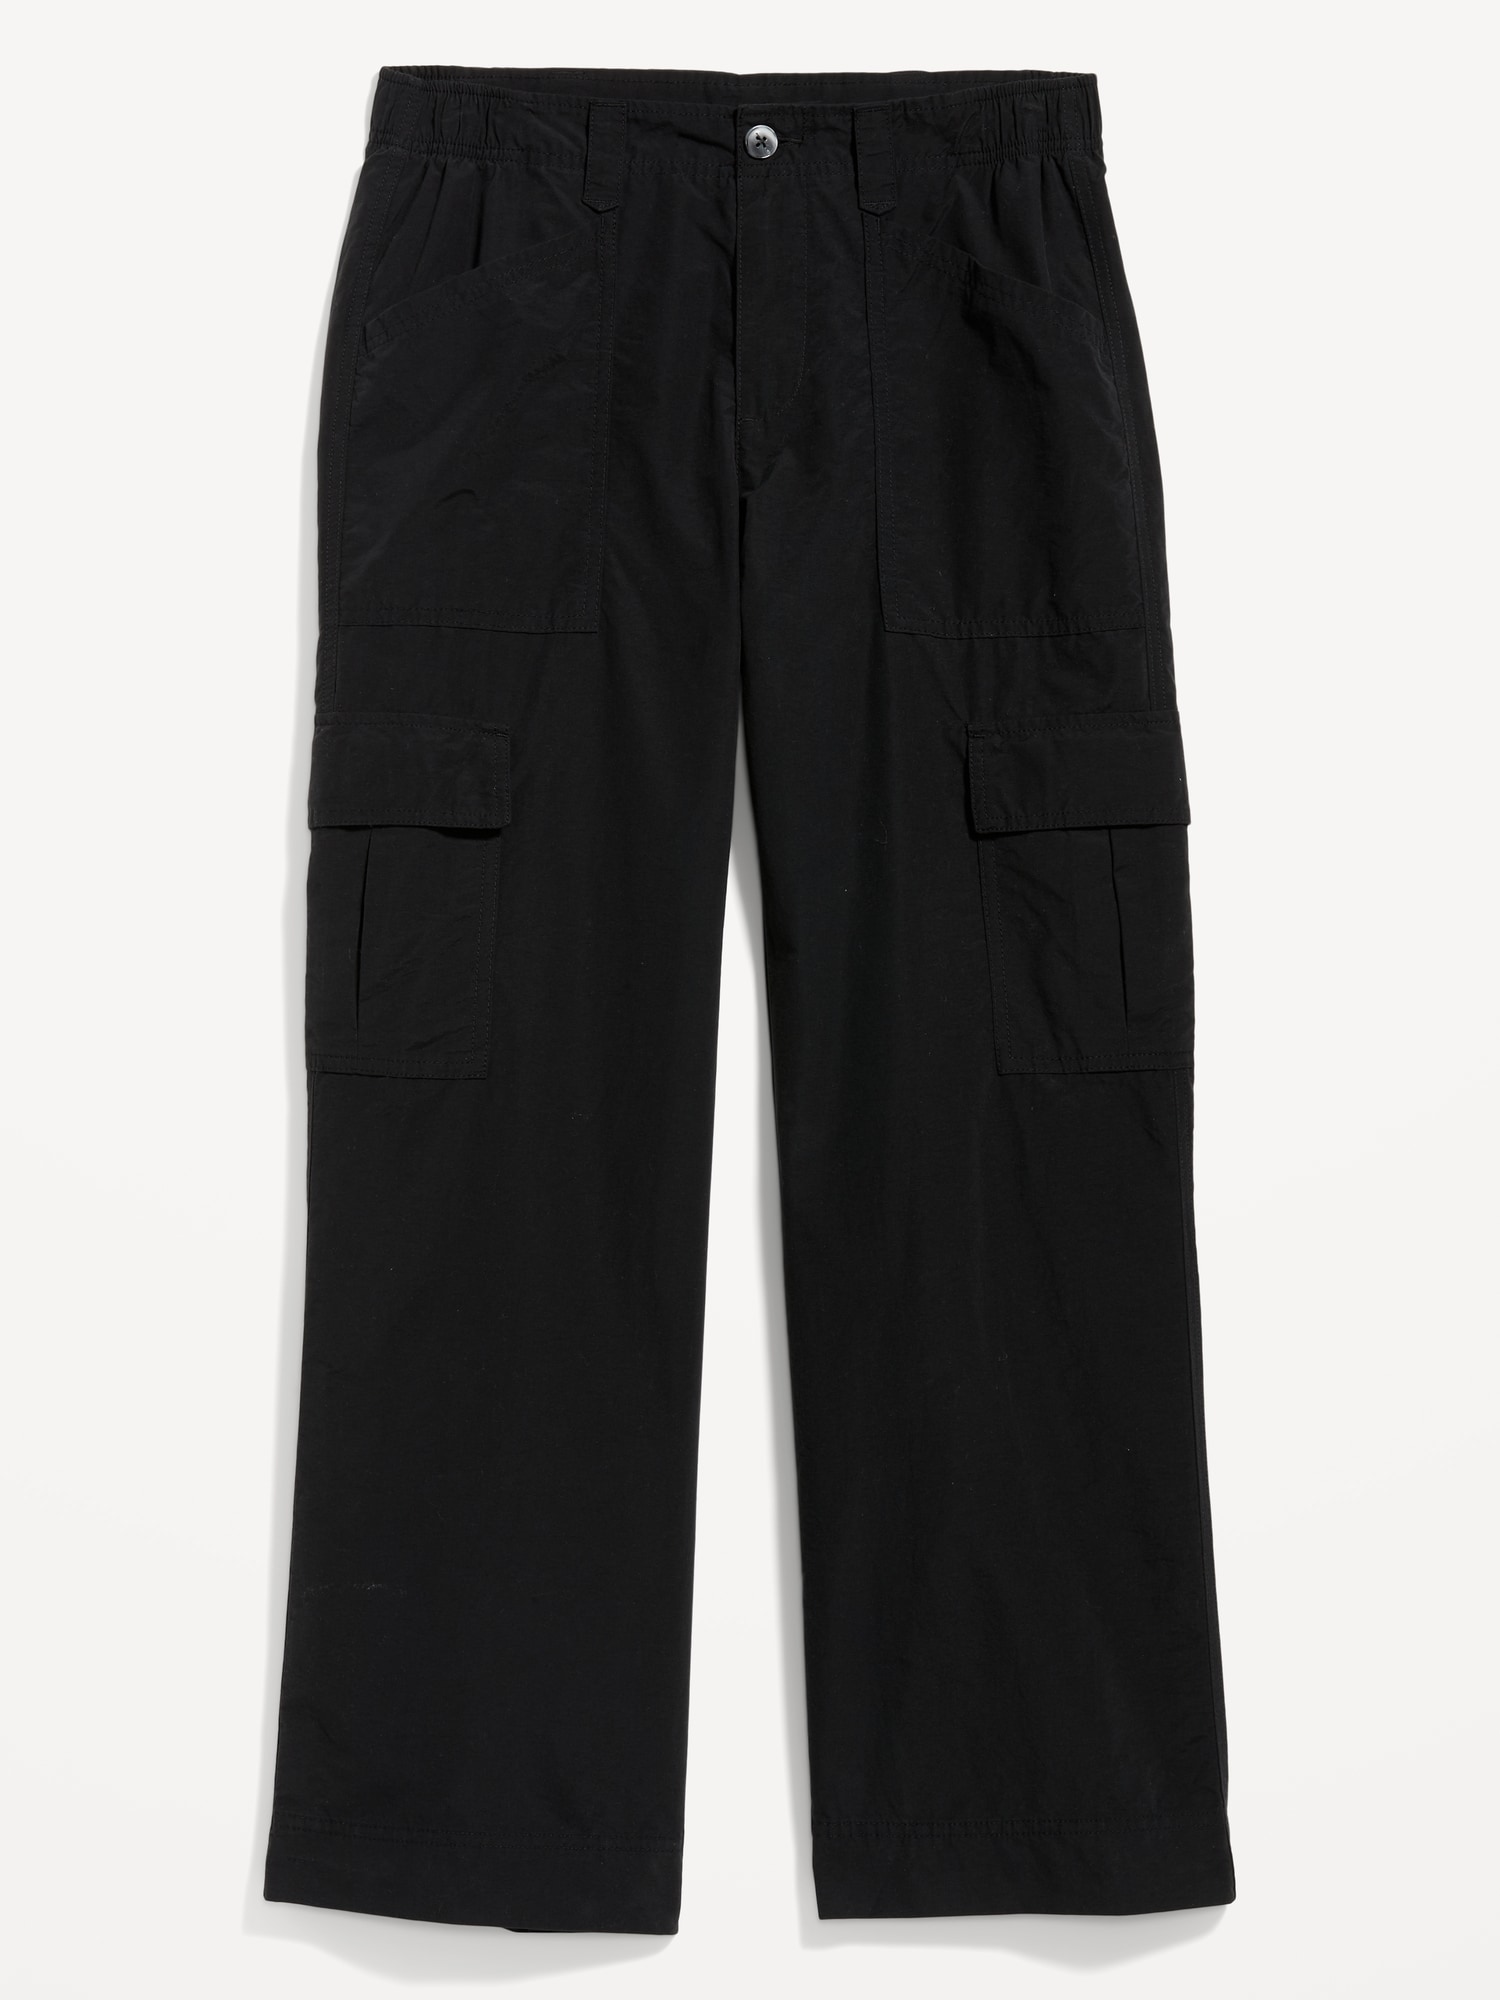 Elastic Pants/Skirt Extenders (Black, White, Khaki) for Maternity – Comfy  Clothiers